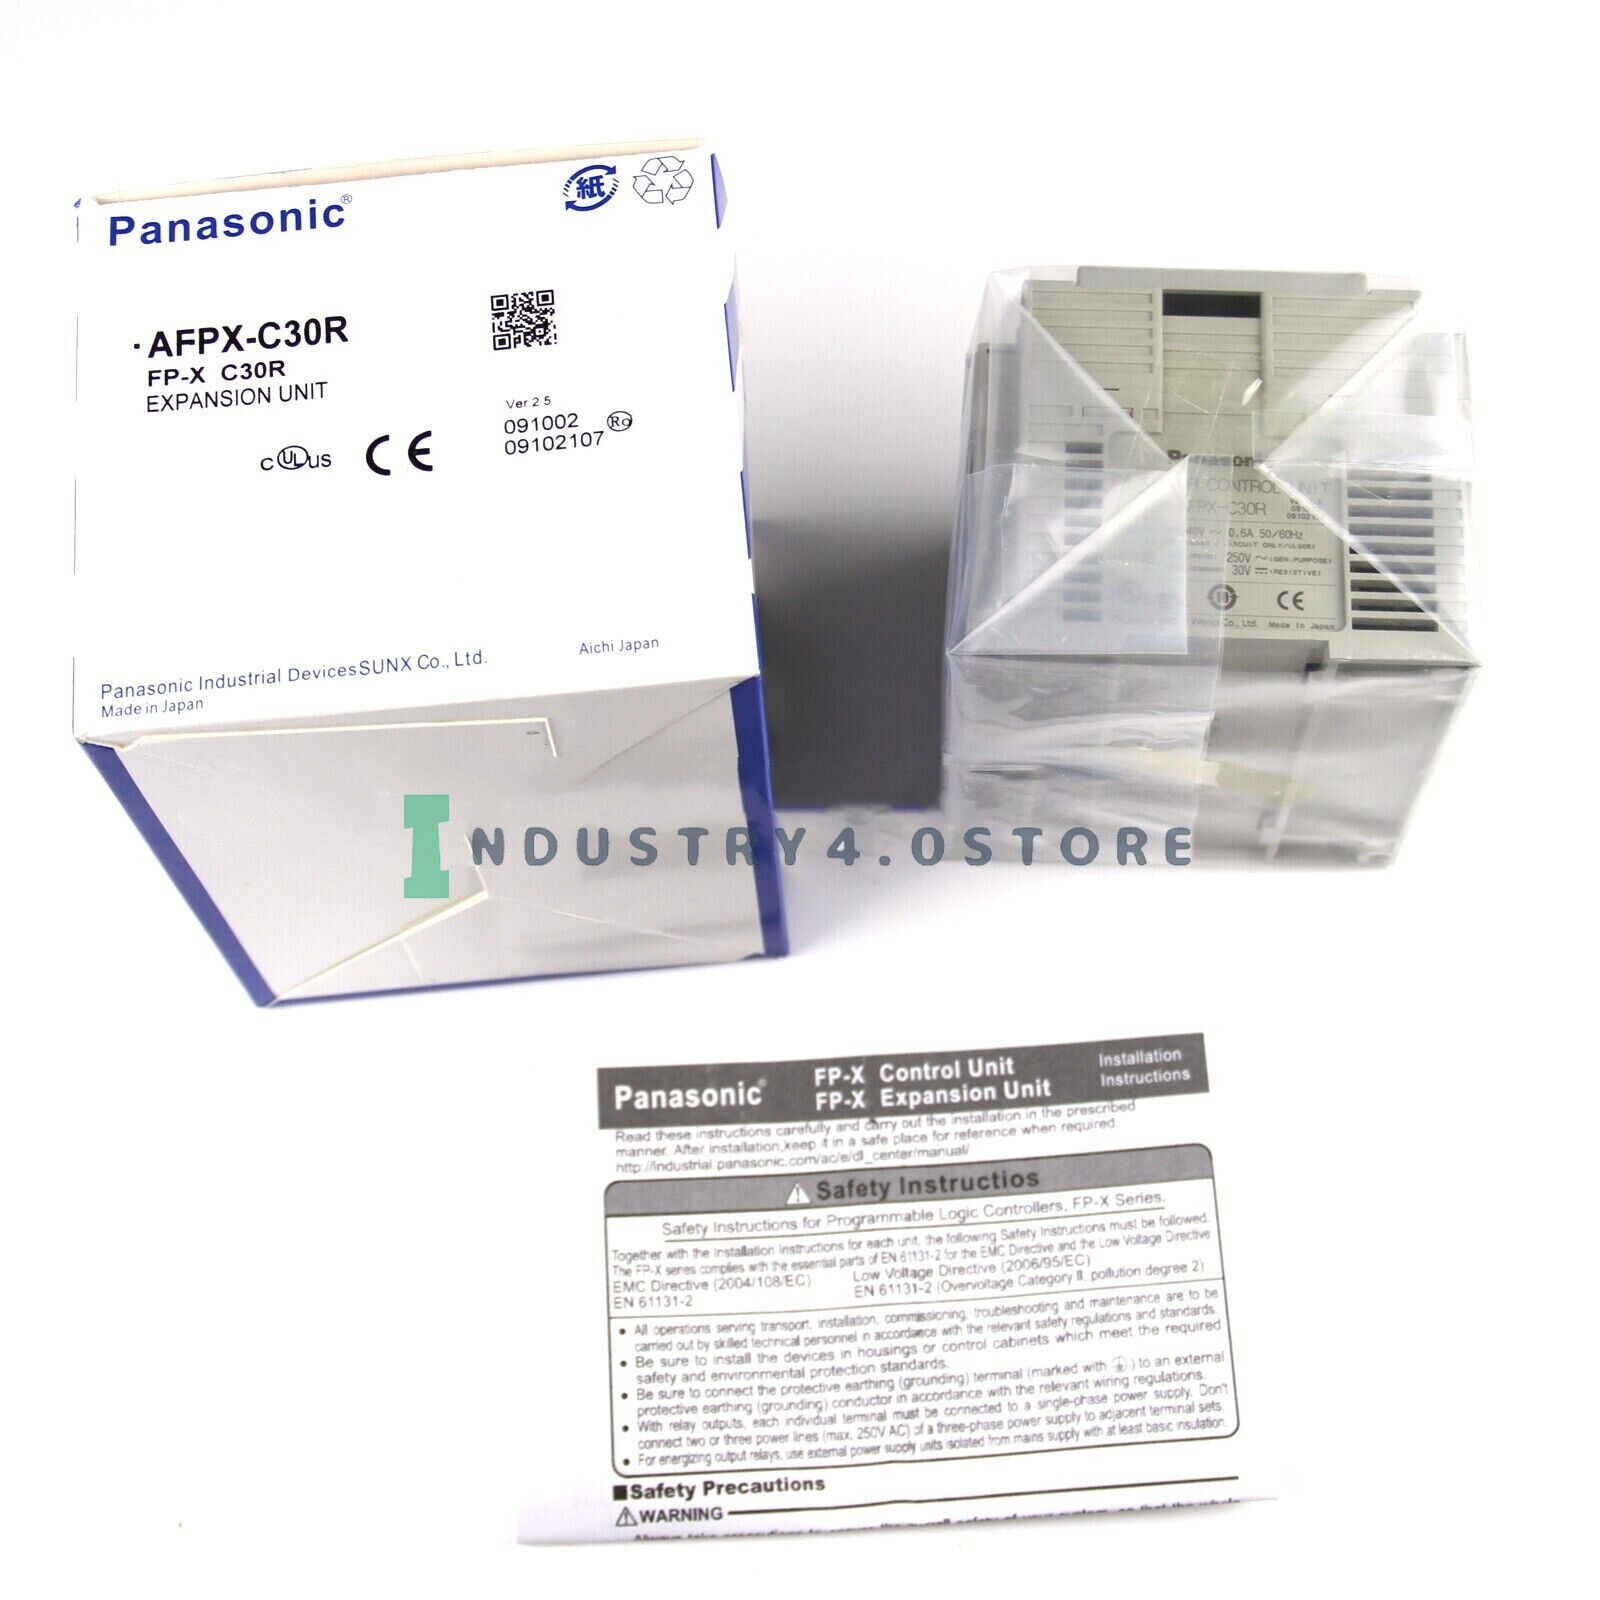 NEW Panasonic AFPX-C30R PLC Control Unit 100~240VAC 16 DC Inputs